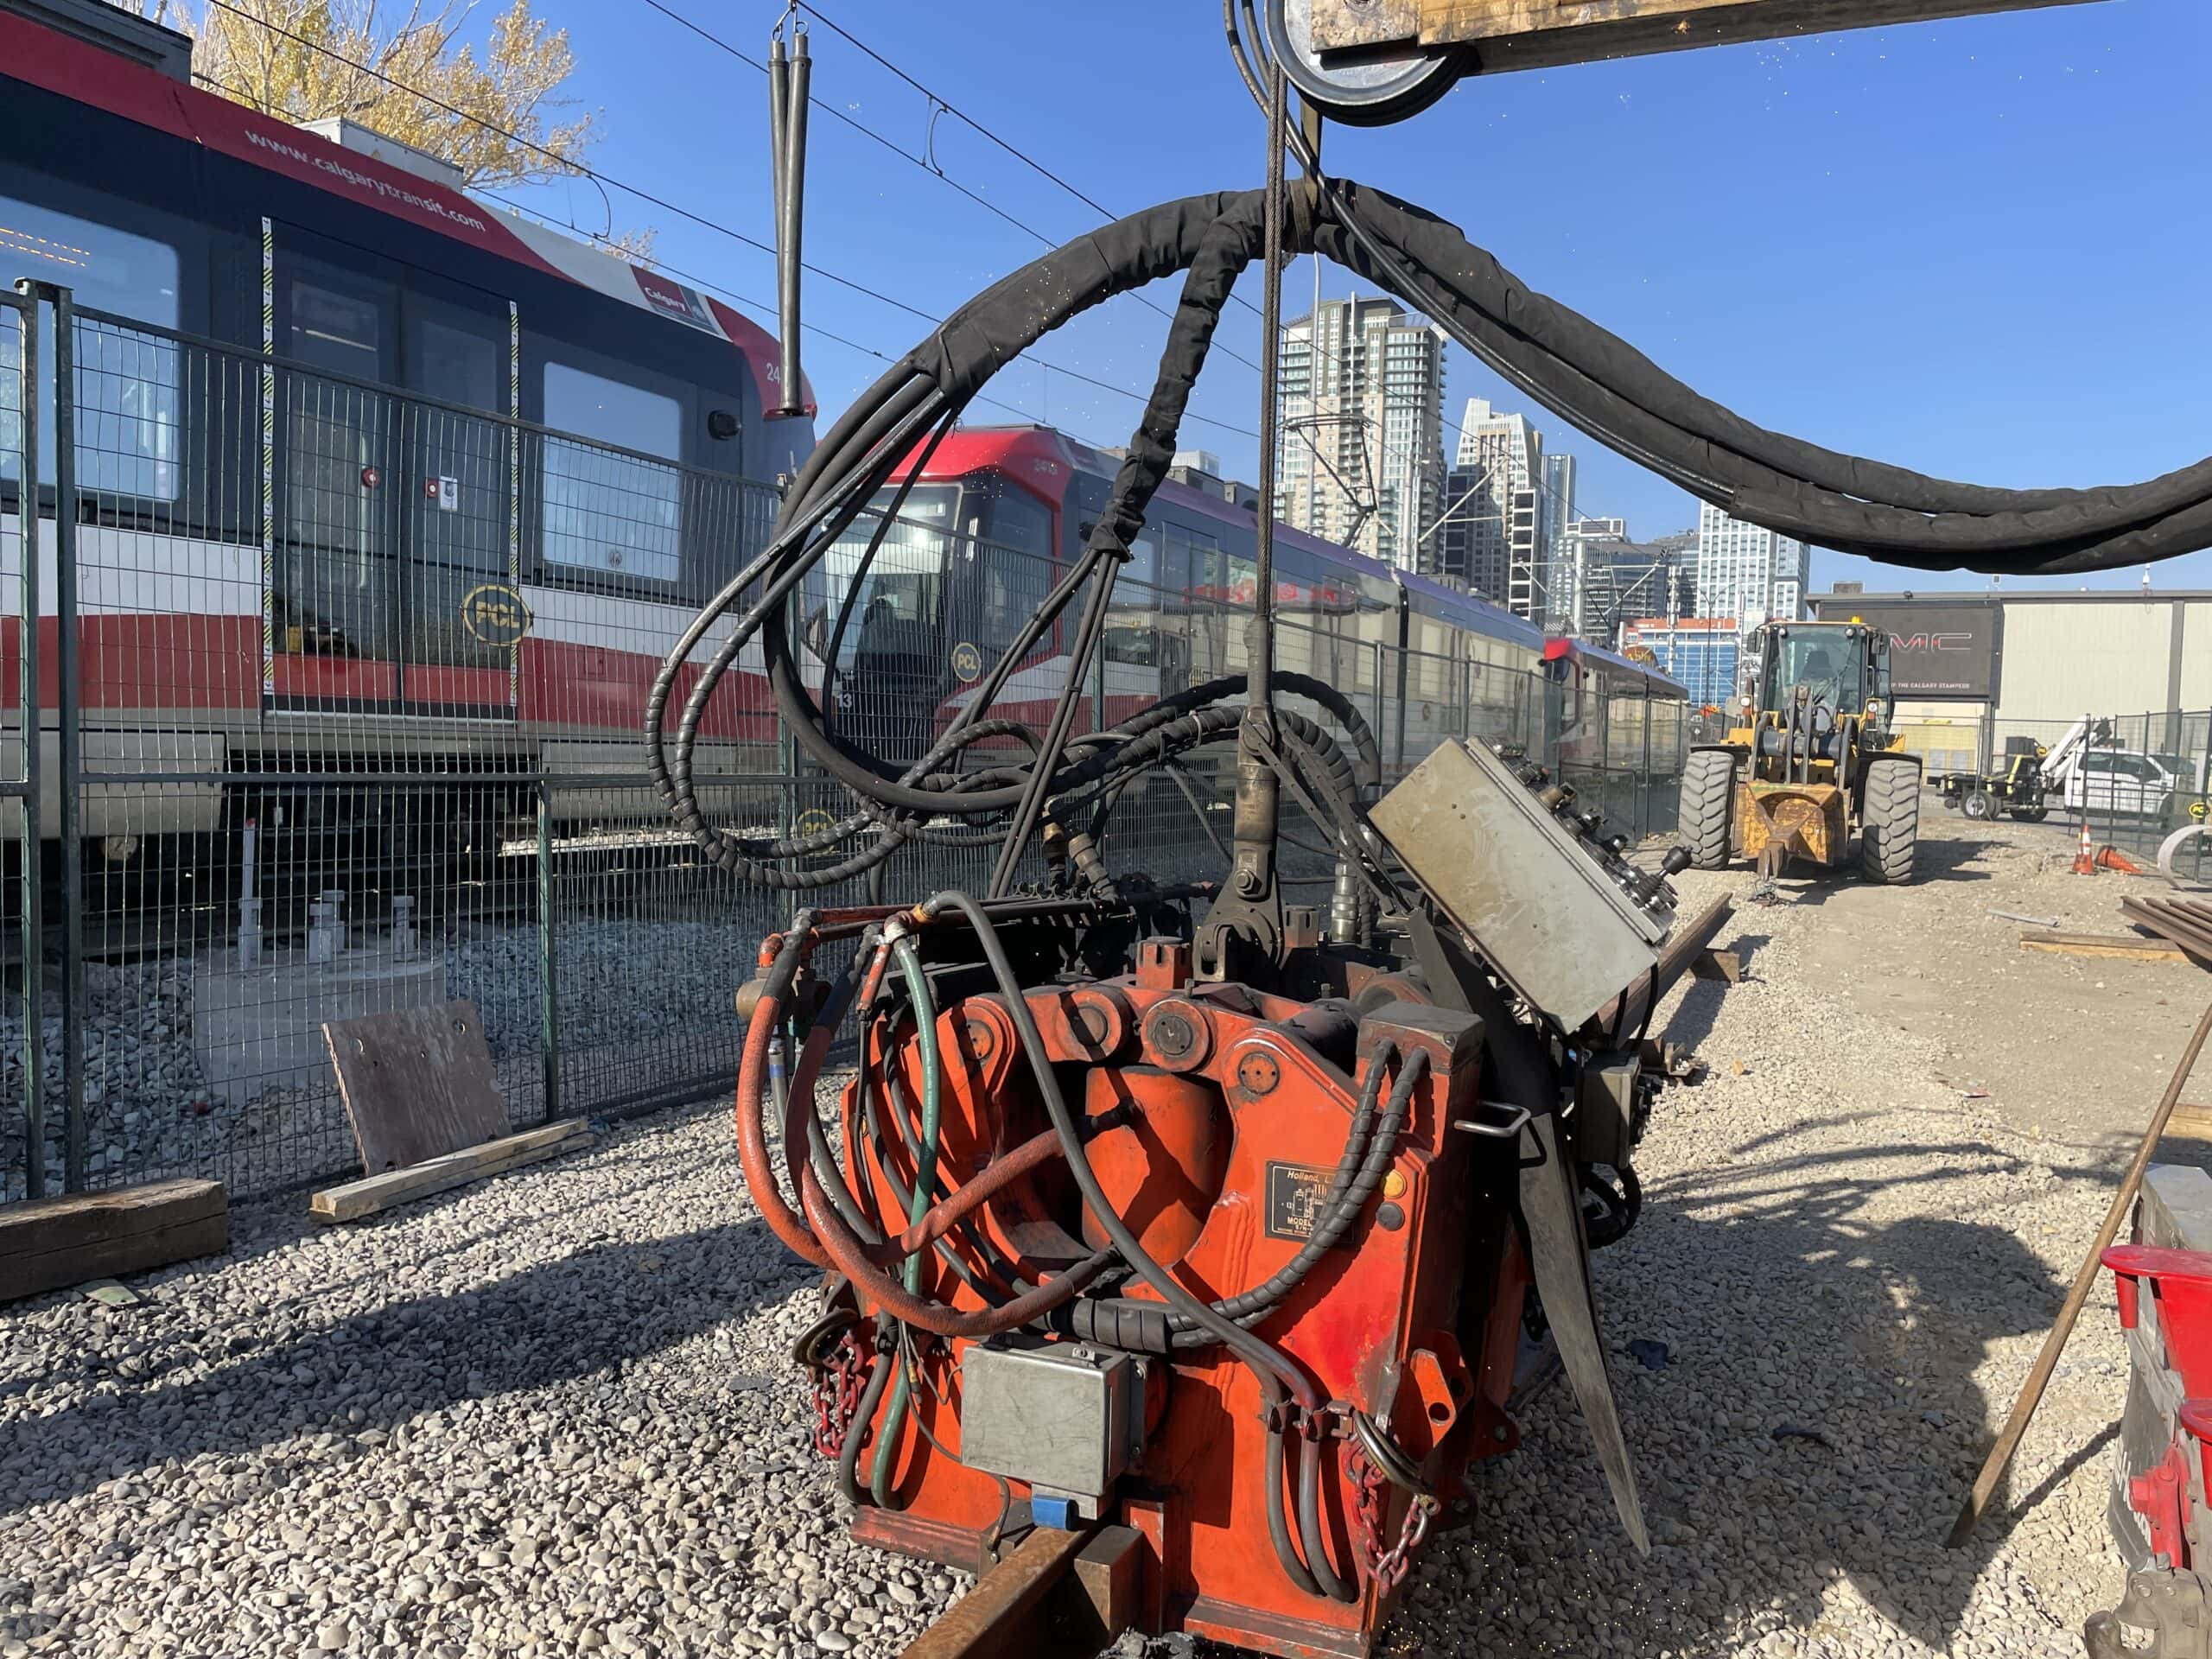 Flash-butt welding machine on transit rail.